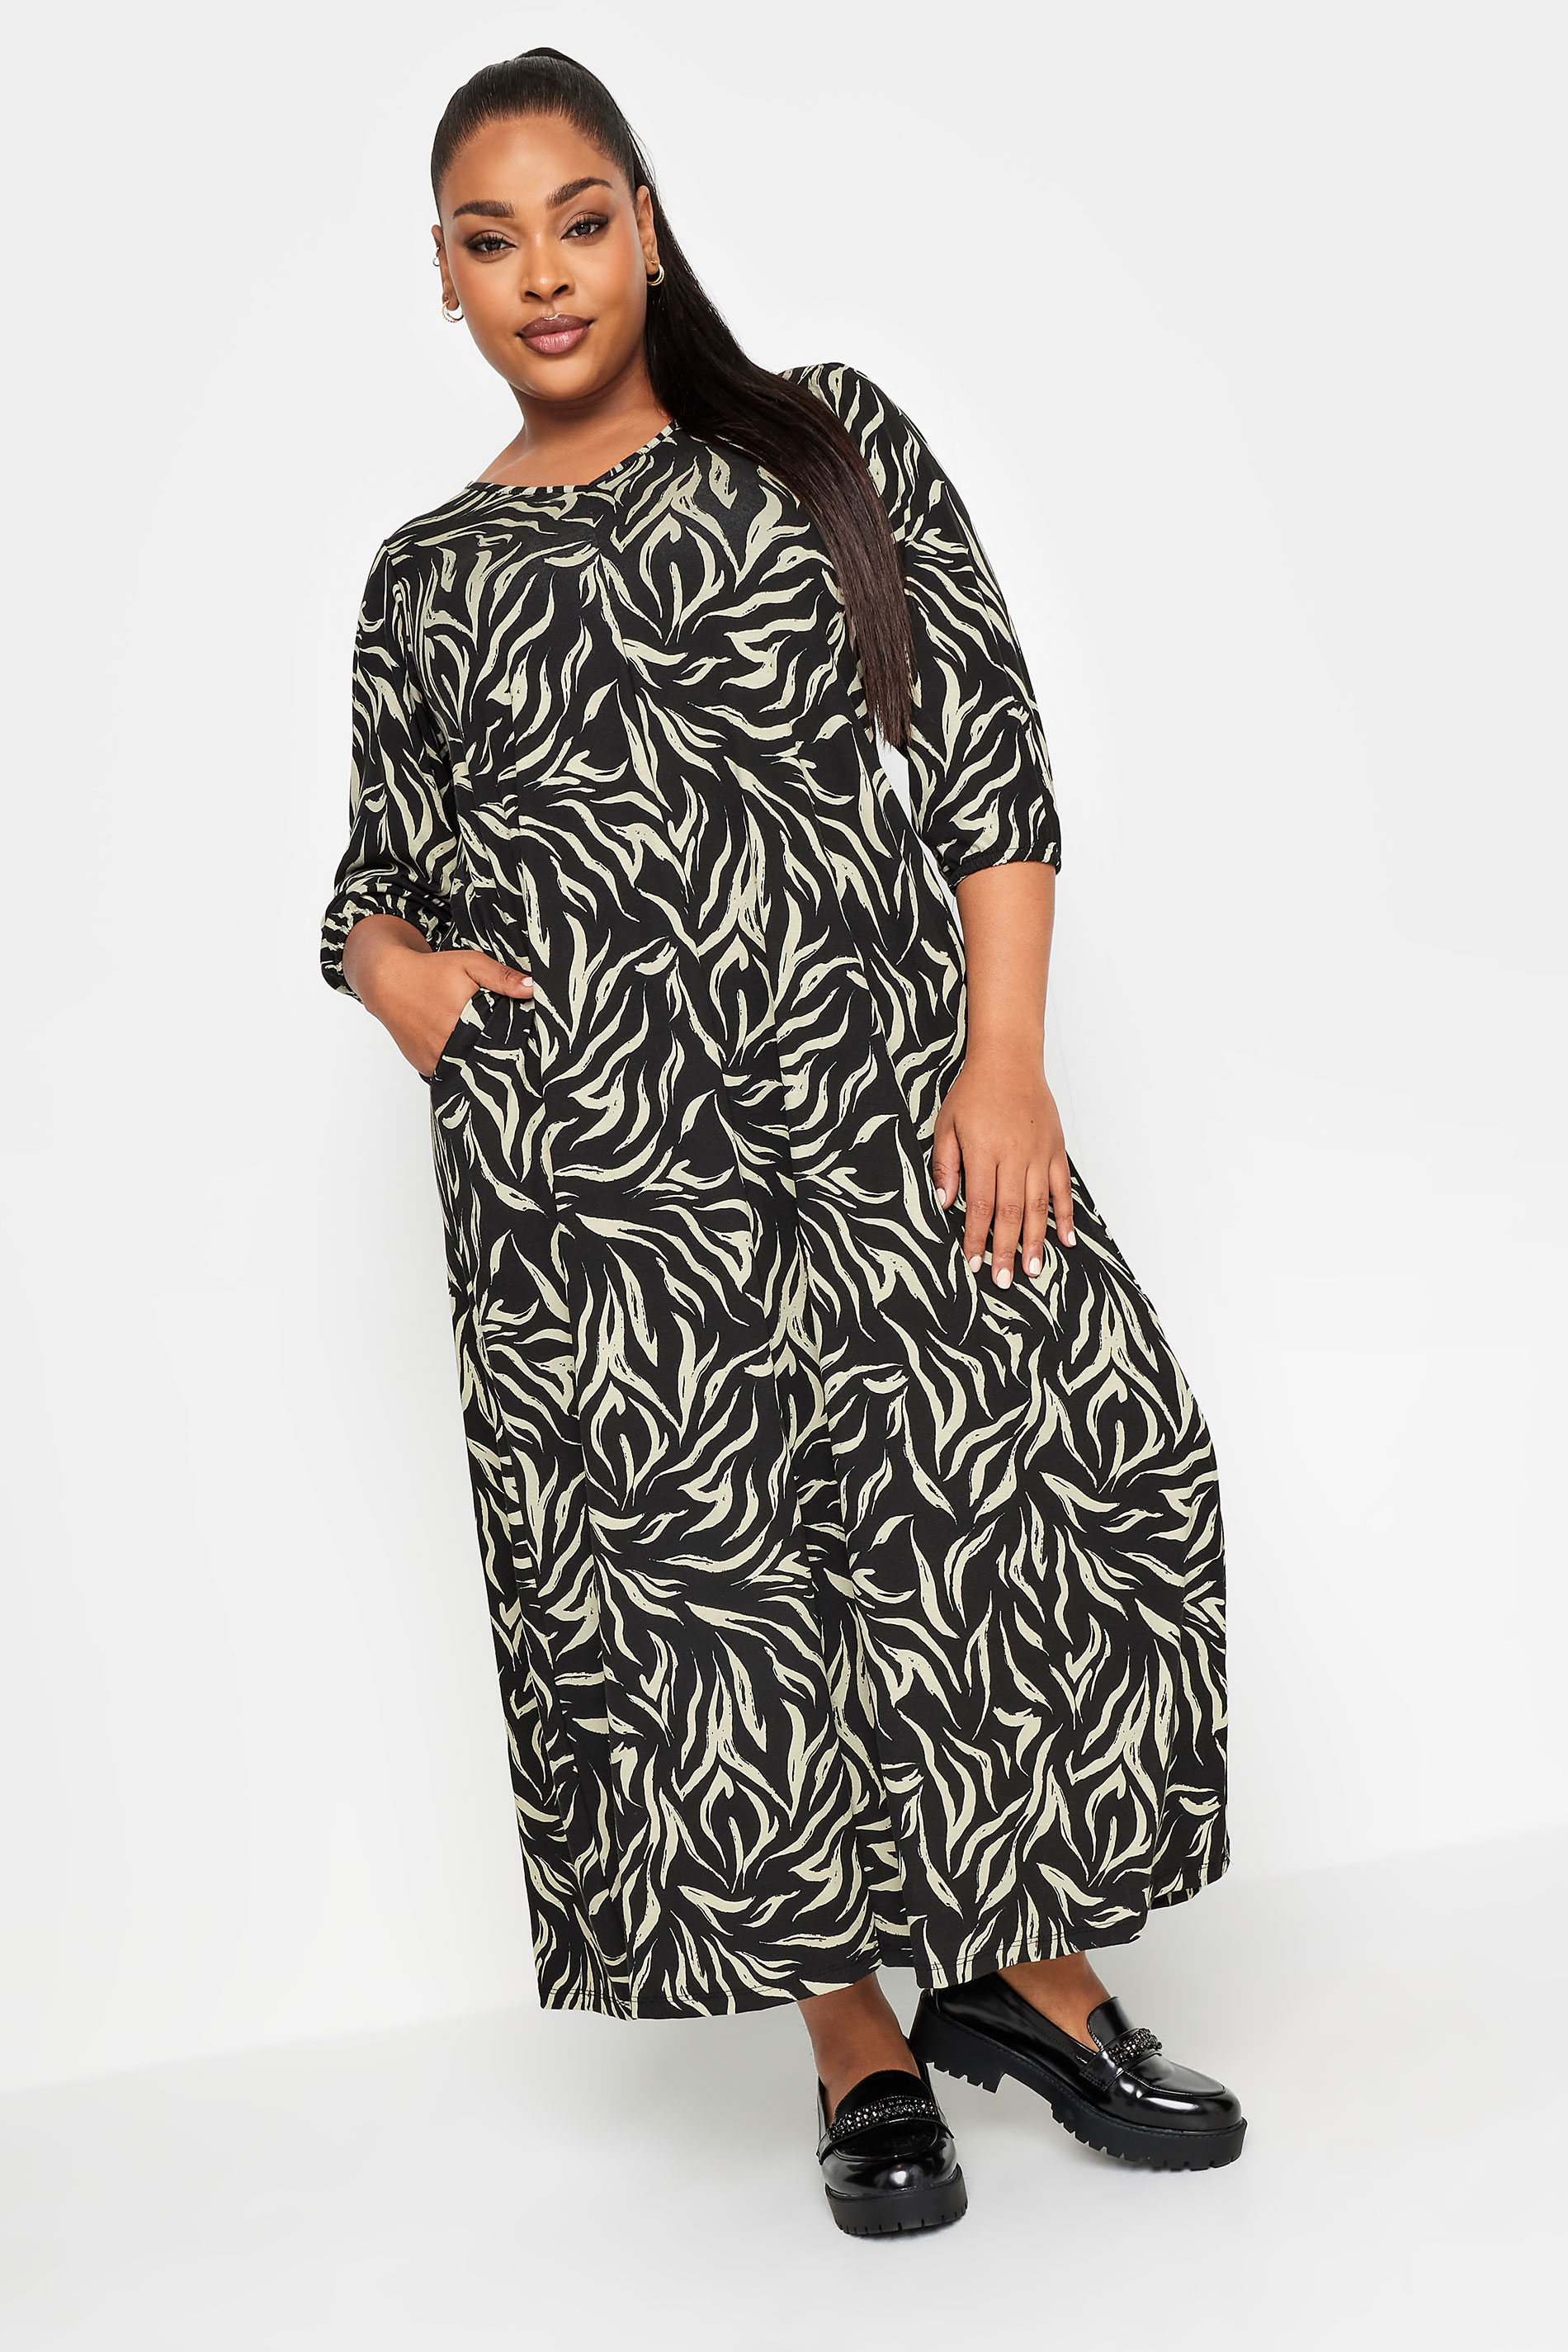 YOURS Plus Size Black Zebra Print Maxi Dress | Yours Clothing 1